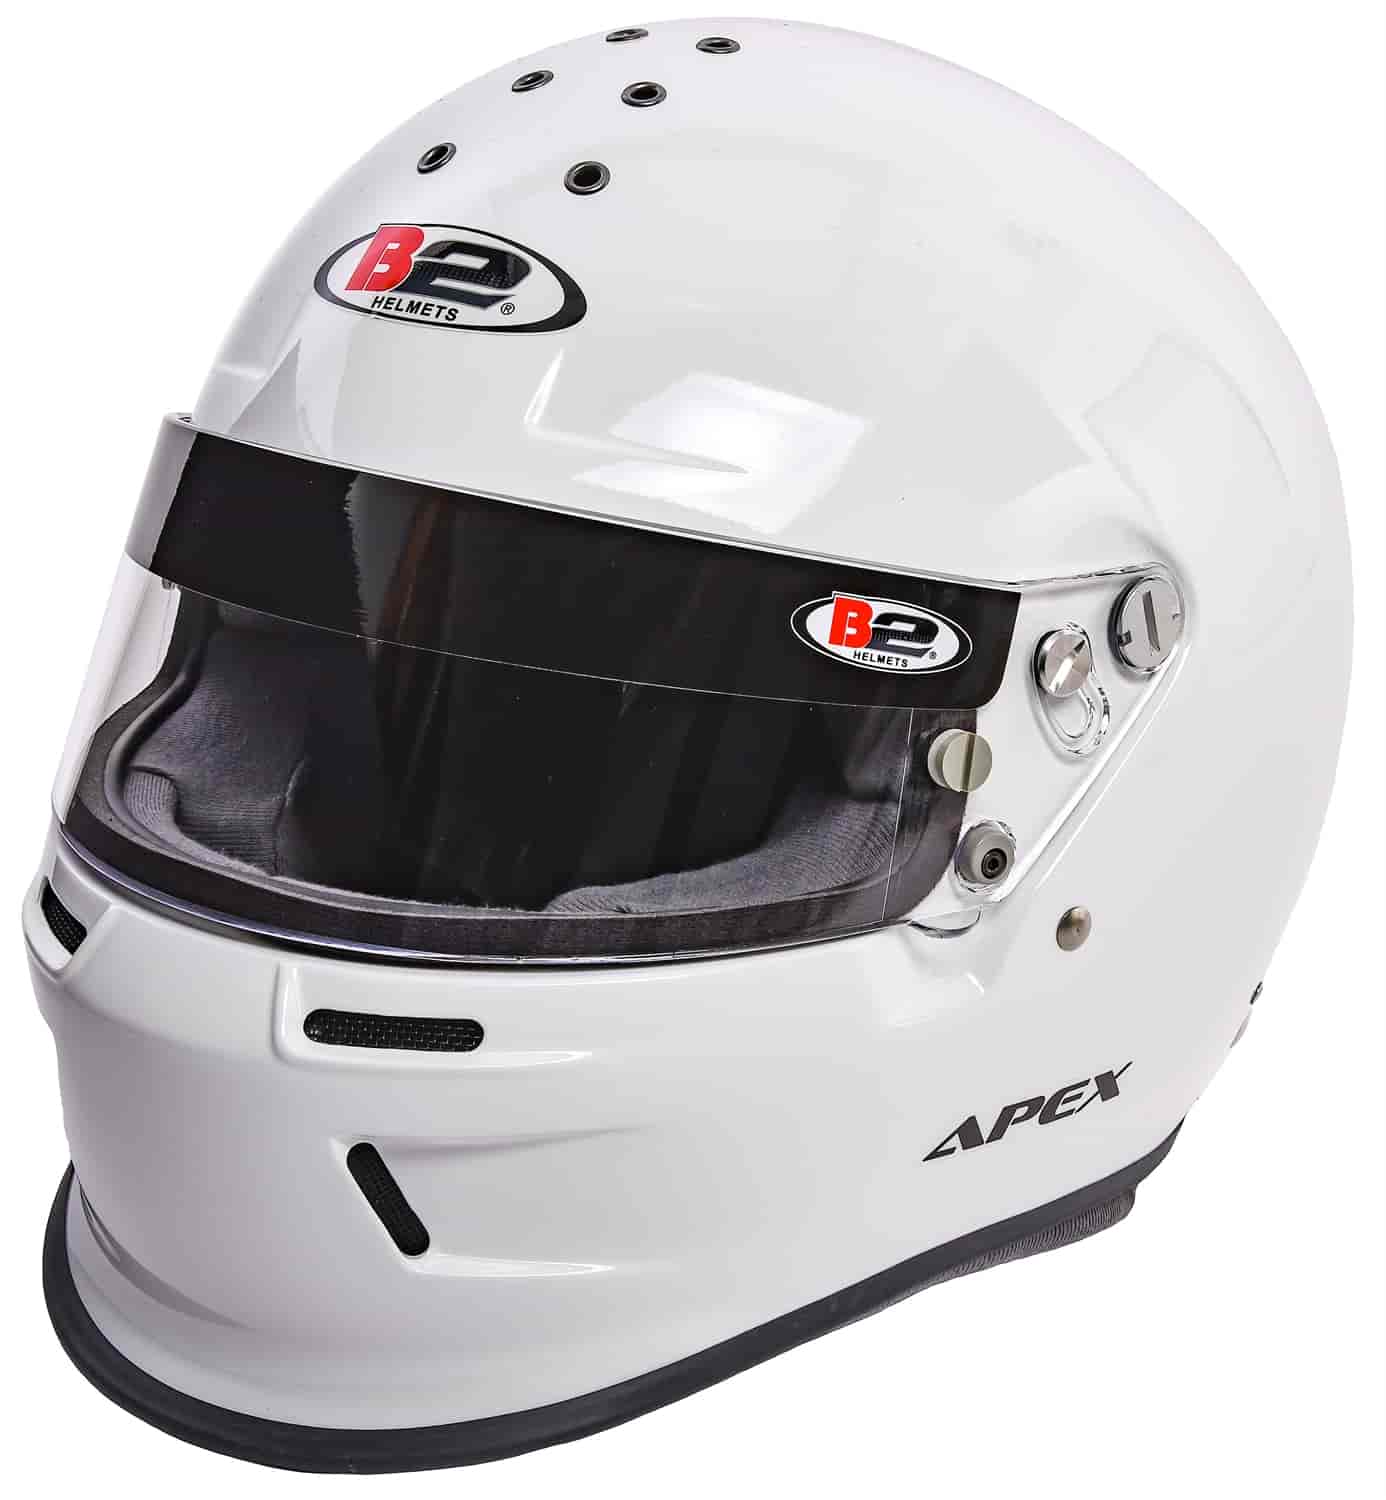 Apex Helmet White - Small